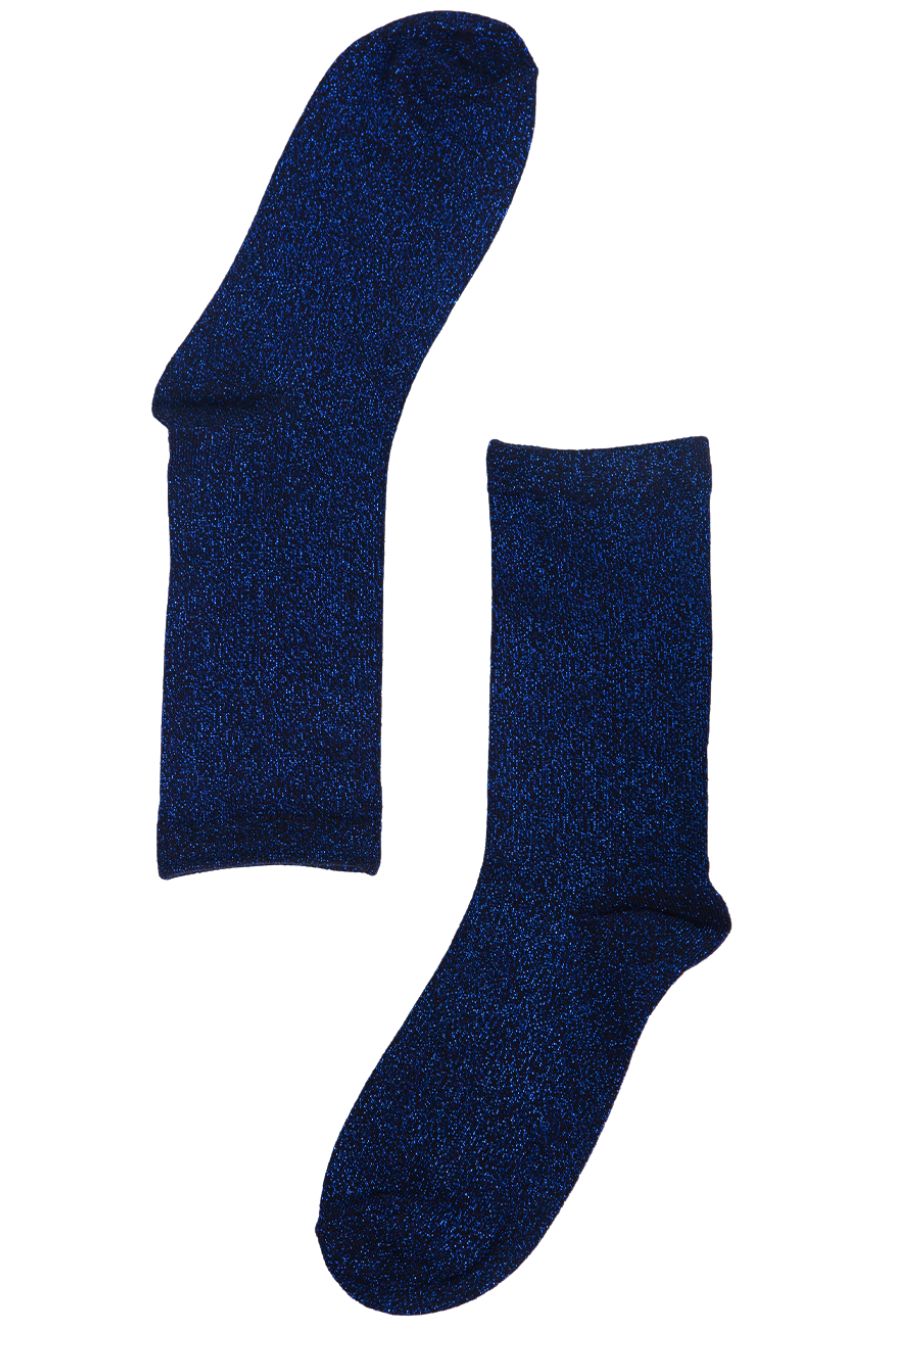 black and royal blue glitter ankle socks